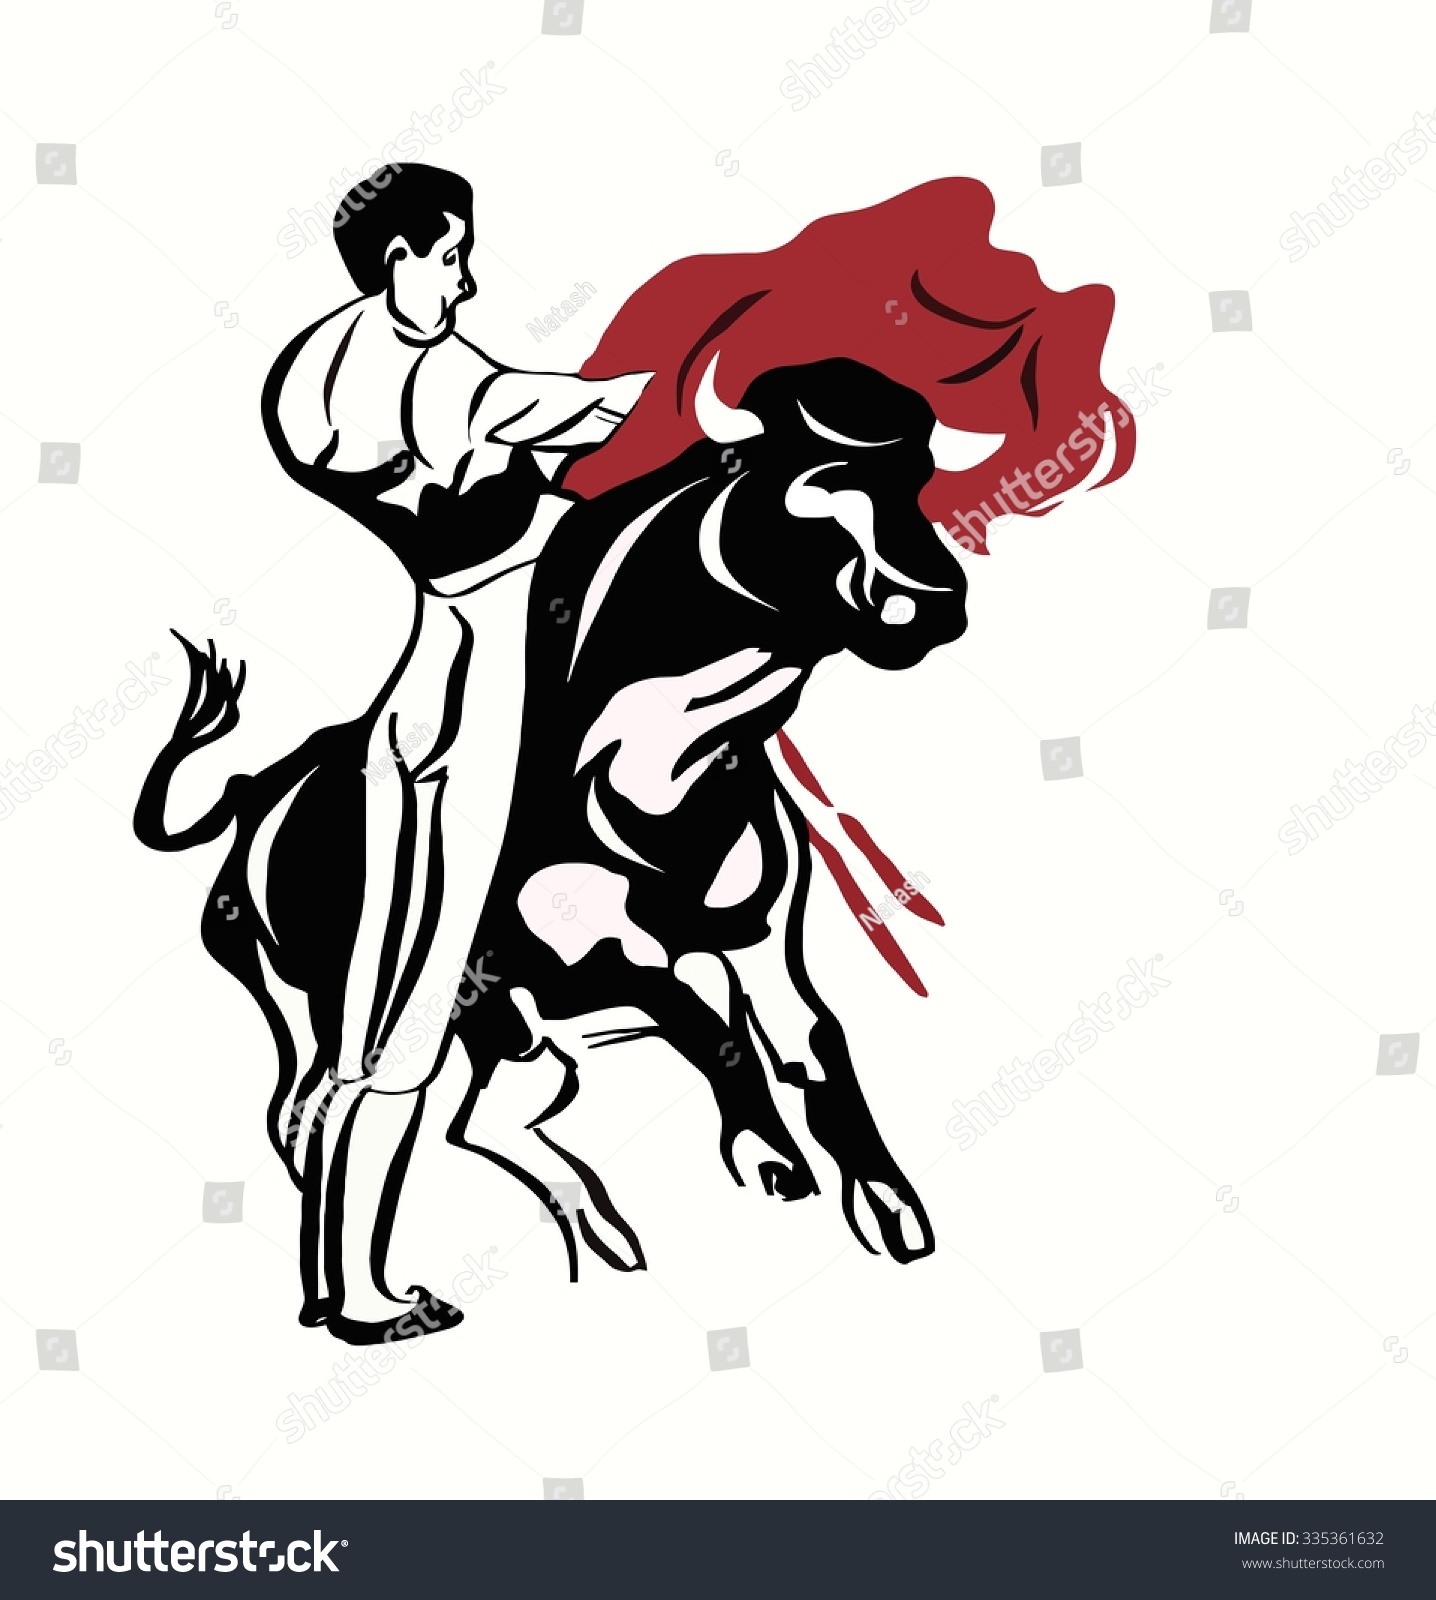 Vector Drawing Of Bullfighter Against The Huge Bull. 335361632